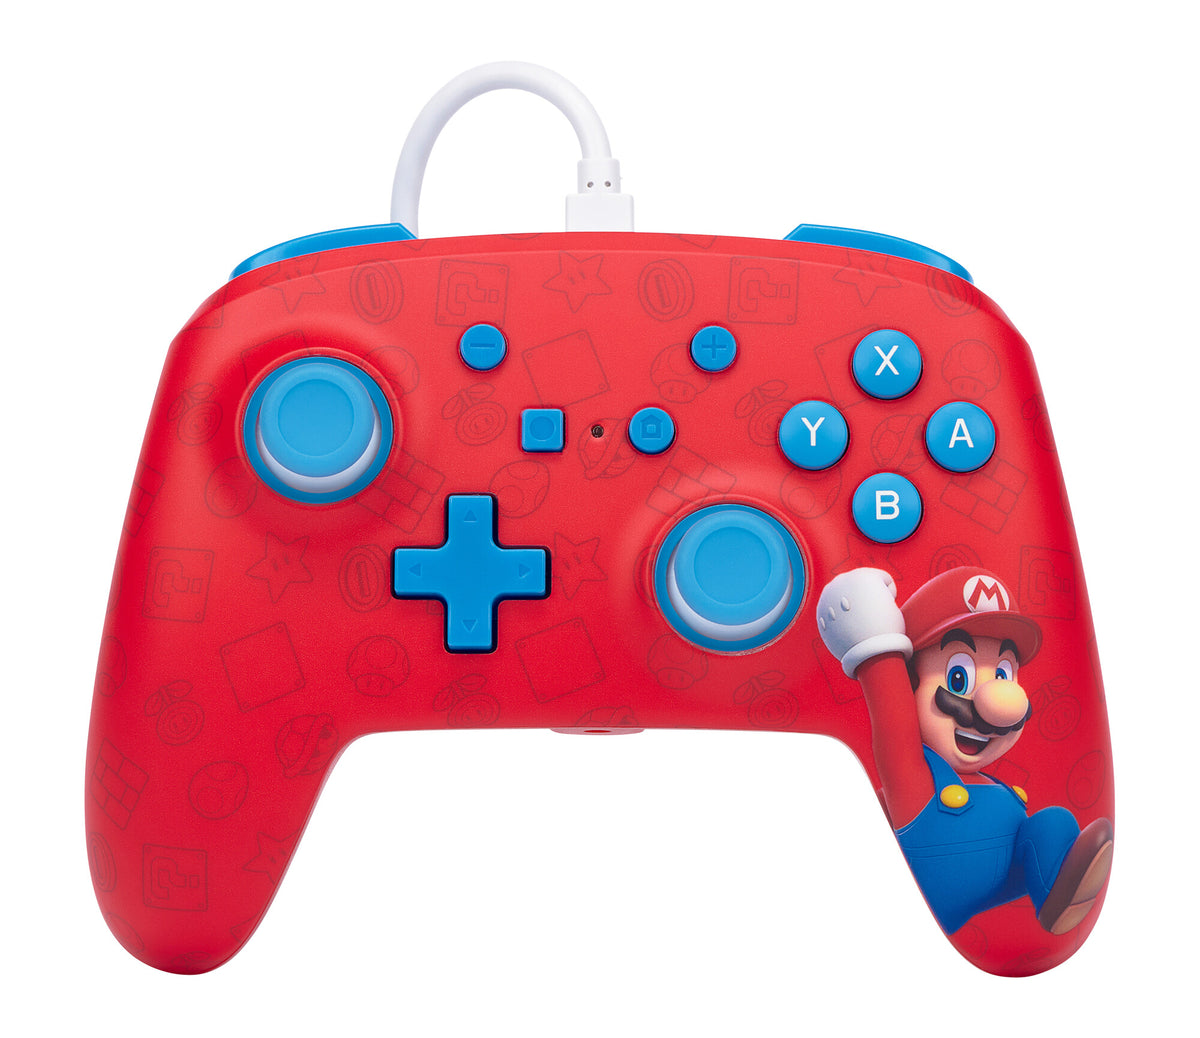 PowerA Enhanced Wired Controller for Nintendo Switch - Woo-hoo! Mario